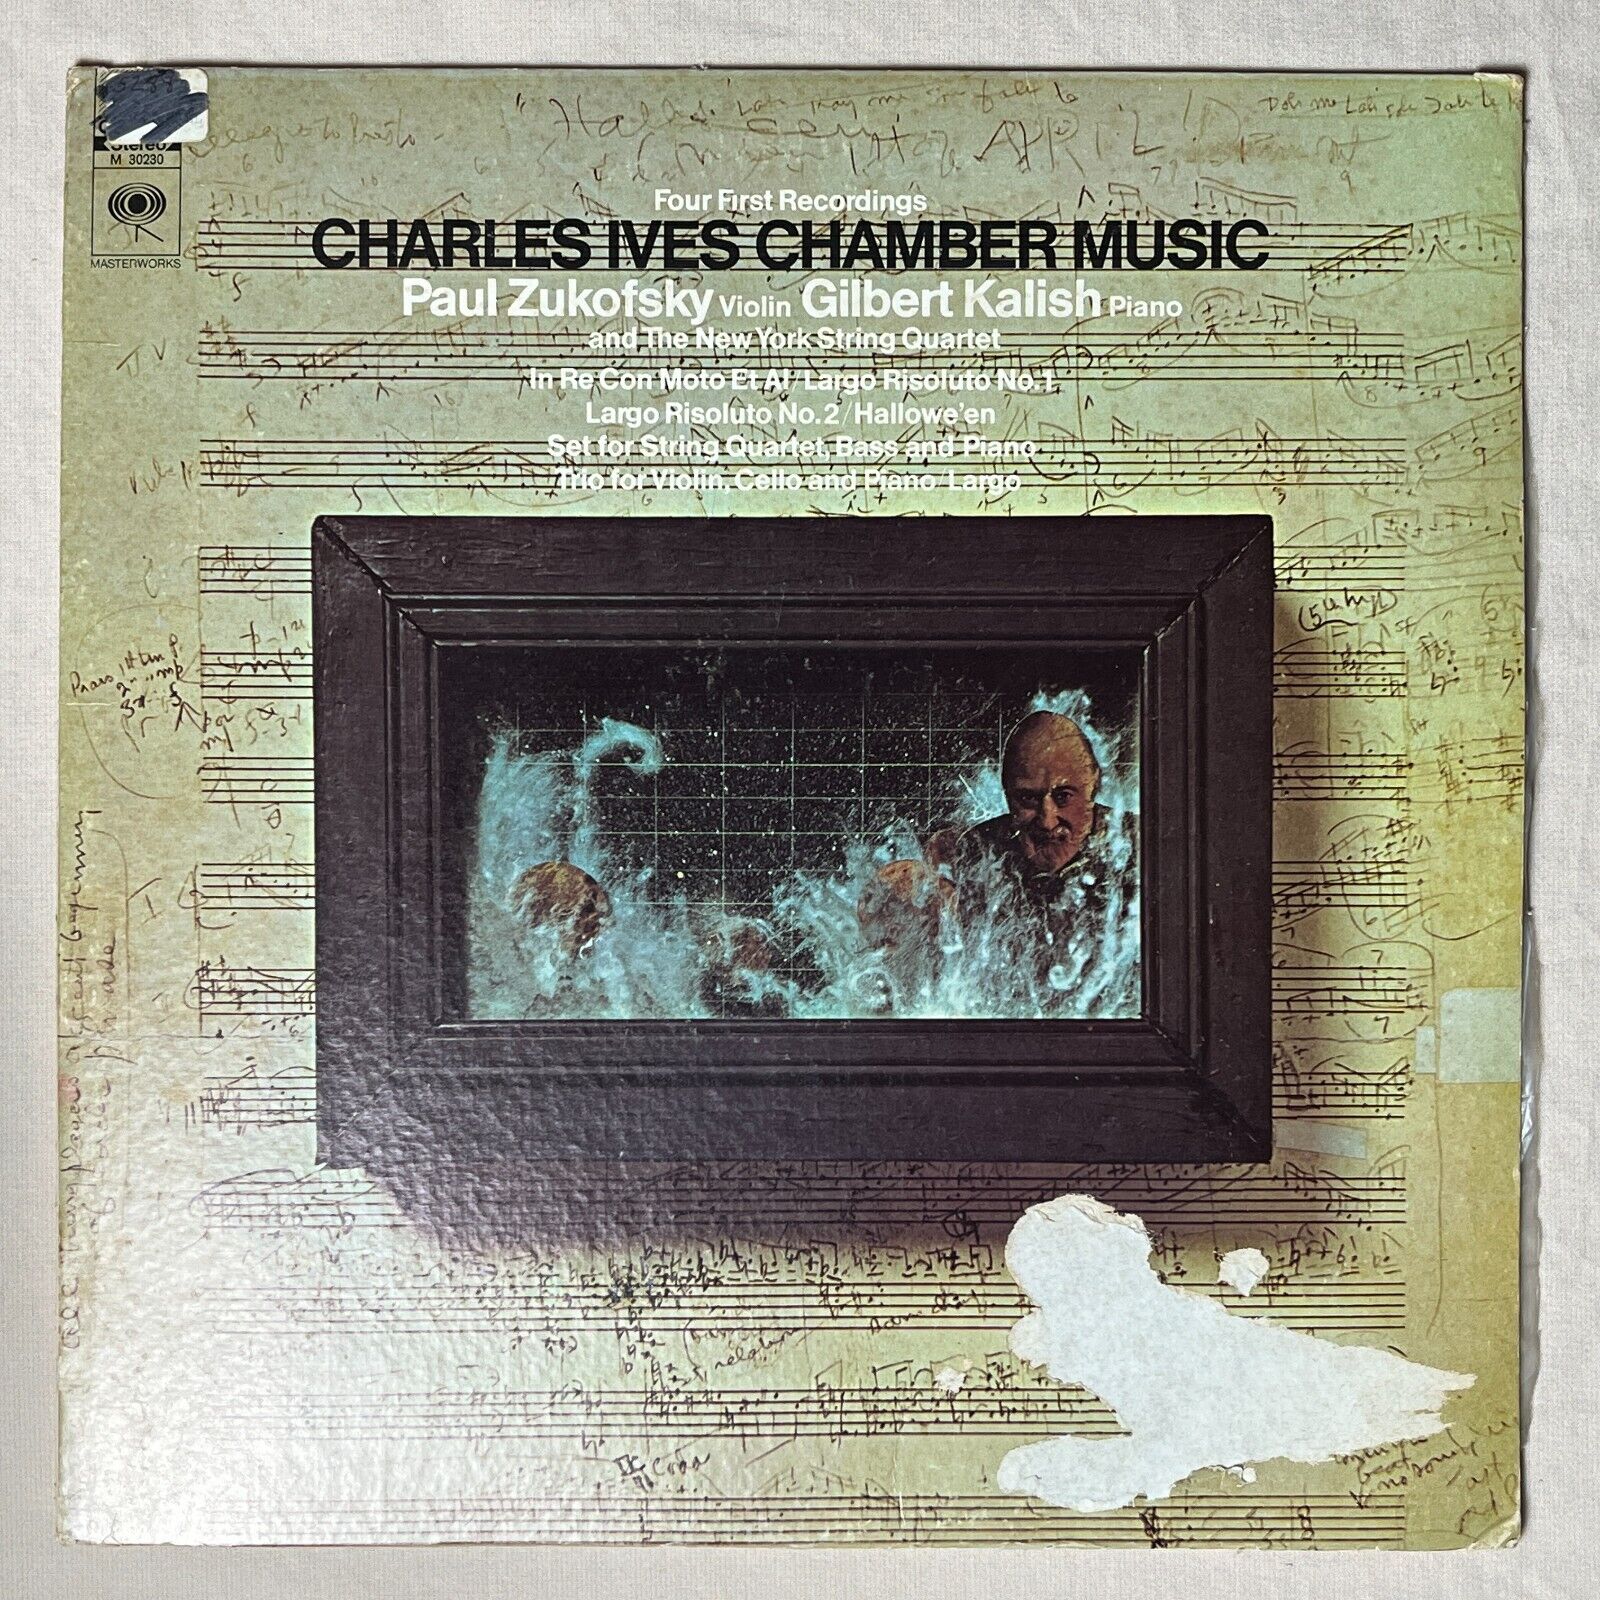 CHARLES IVES Chamber Music 1970 Vinyl LP Columbia M 30230 - VG